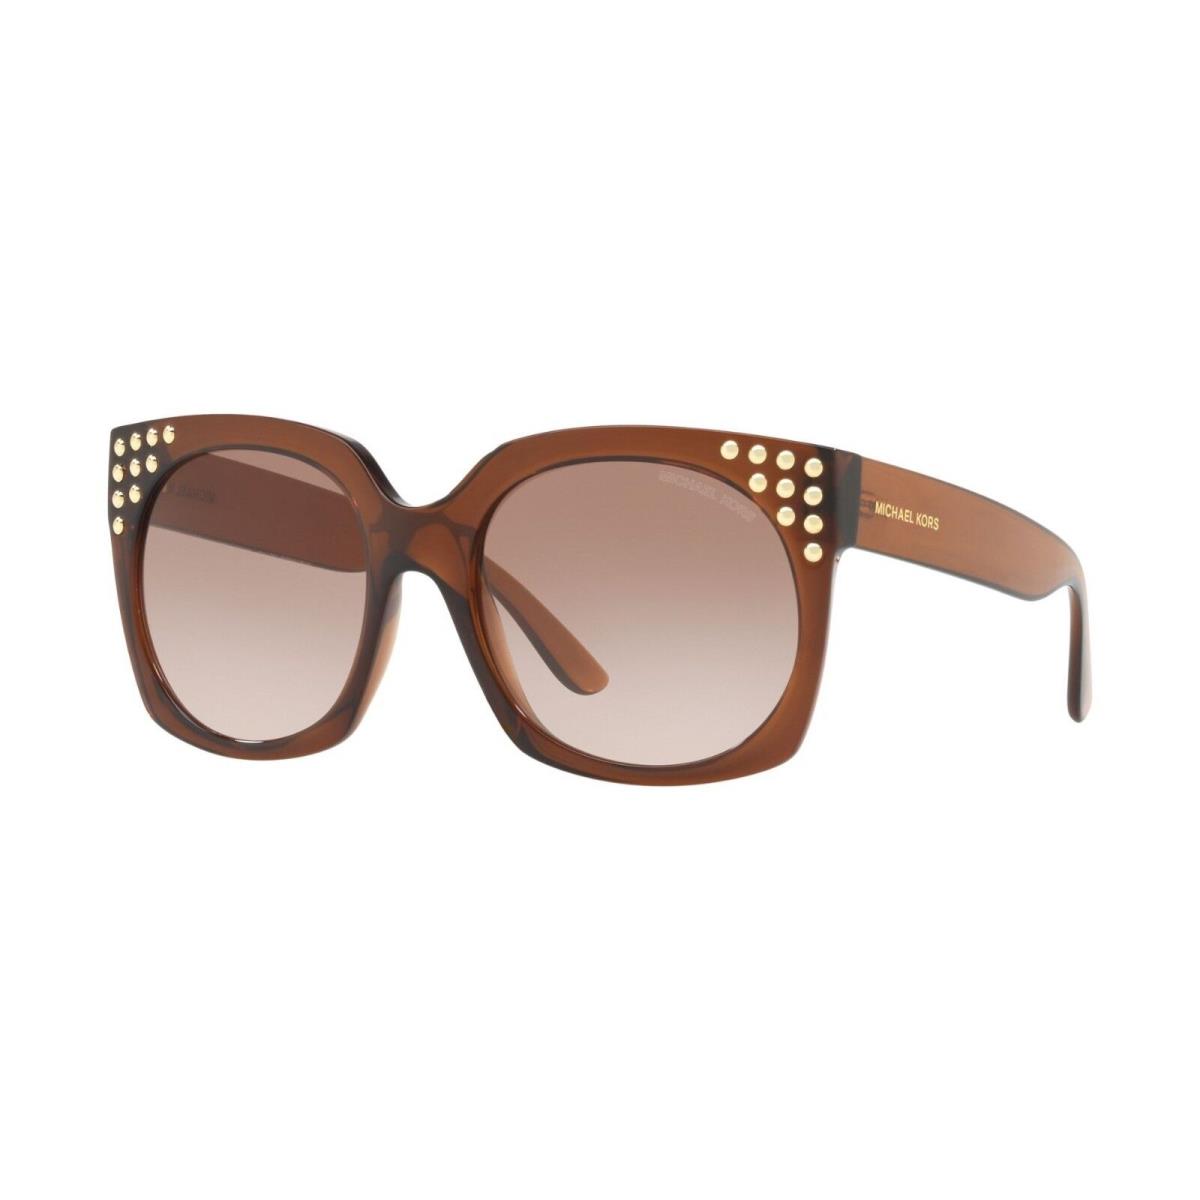 Michael Kors sunglasses  - Brown , Transparent brown and gold Frame, Brown grey Gradient Lens 2